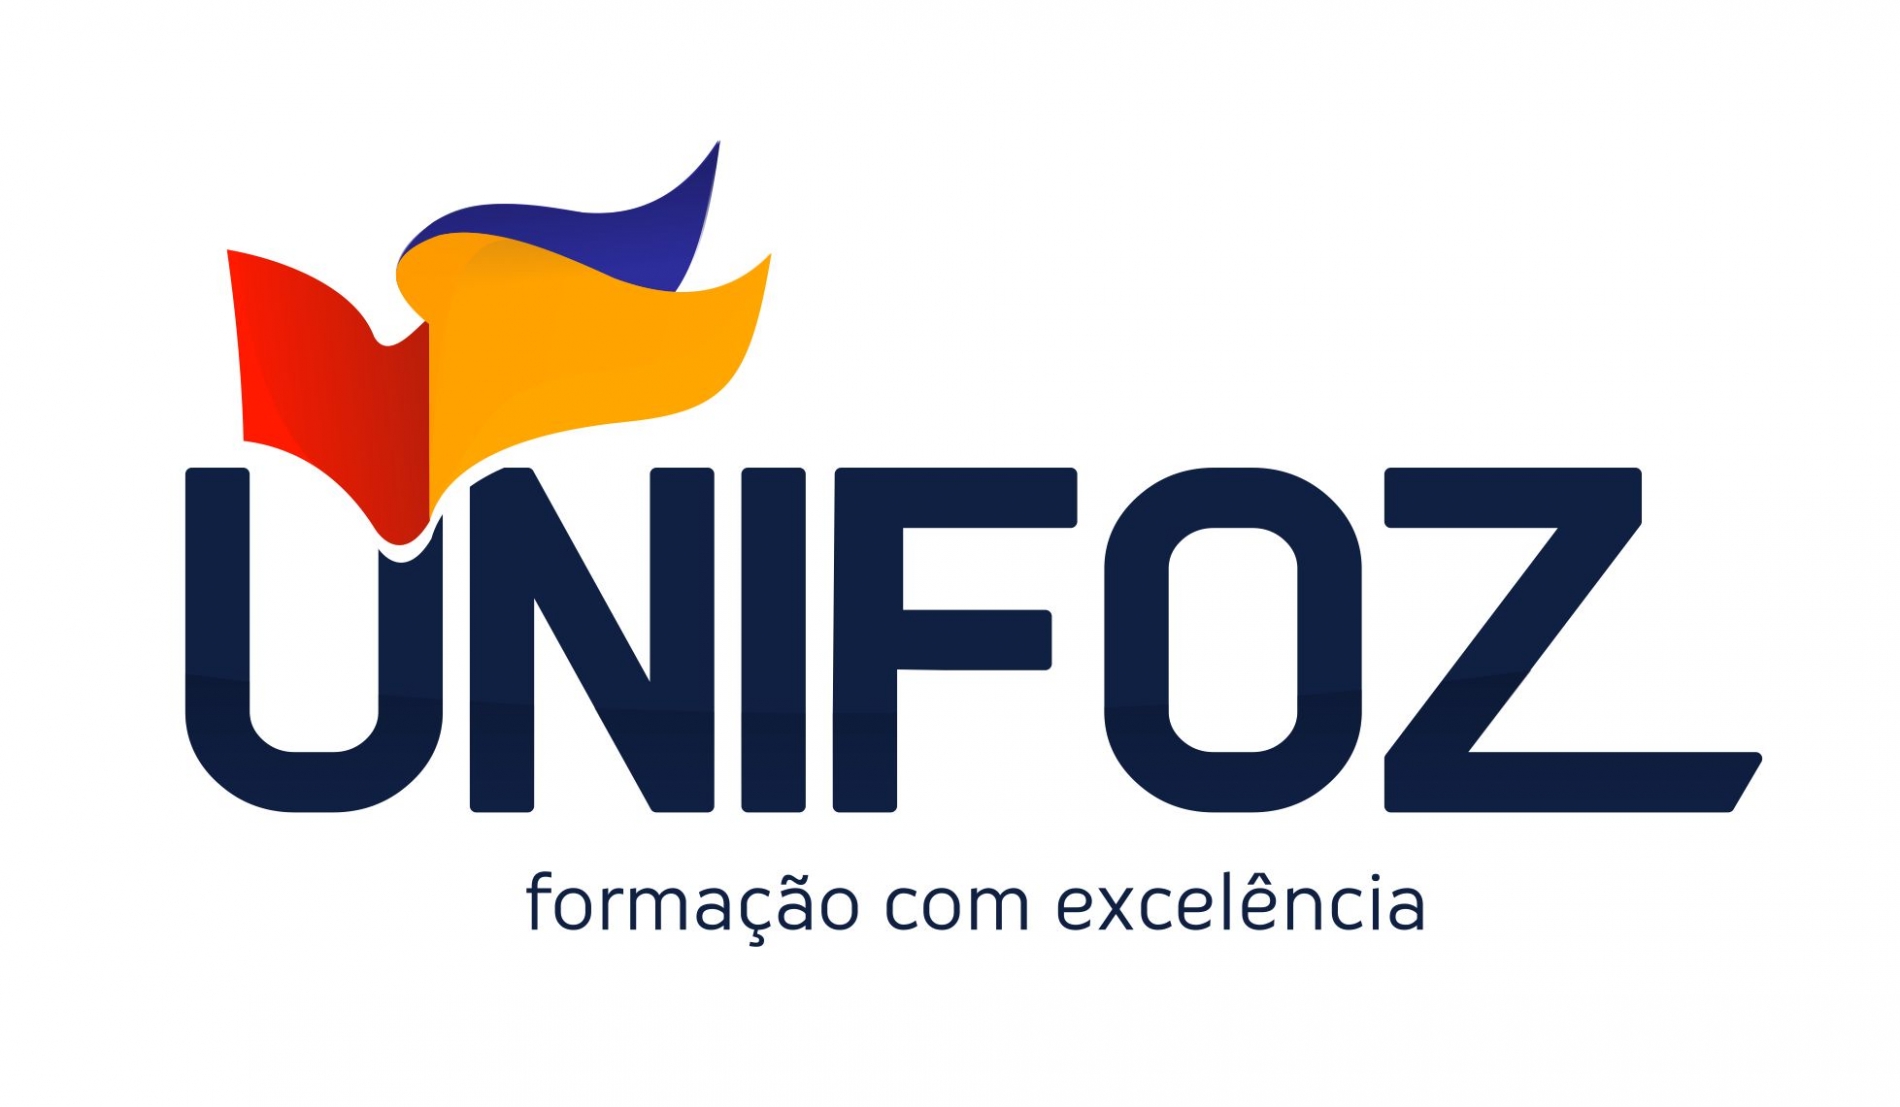 Unified Universities of Foz do Iguacu logo